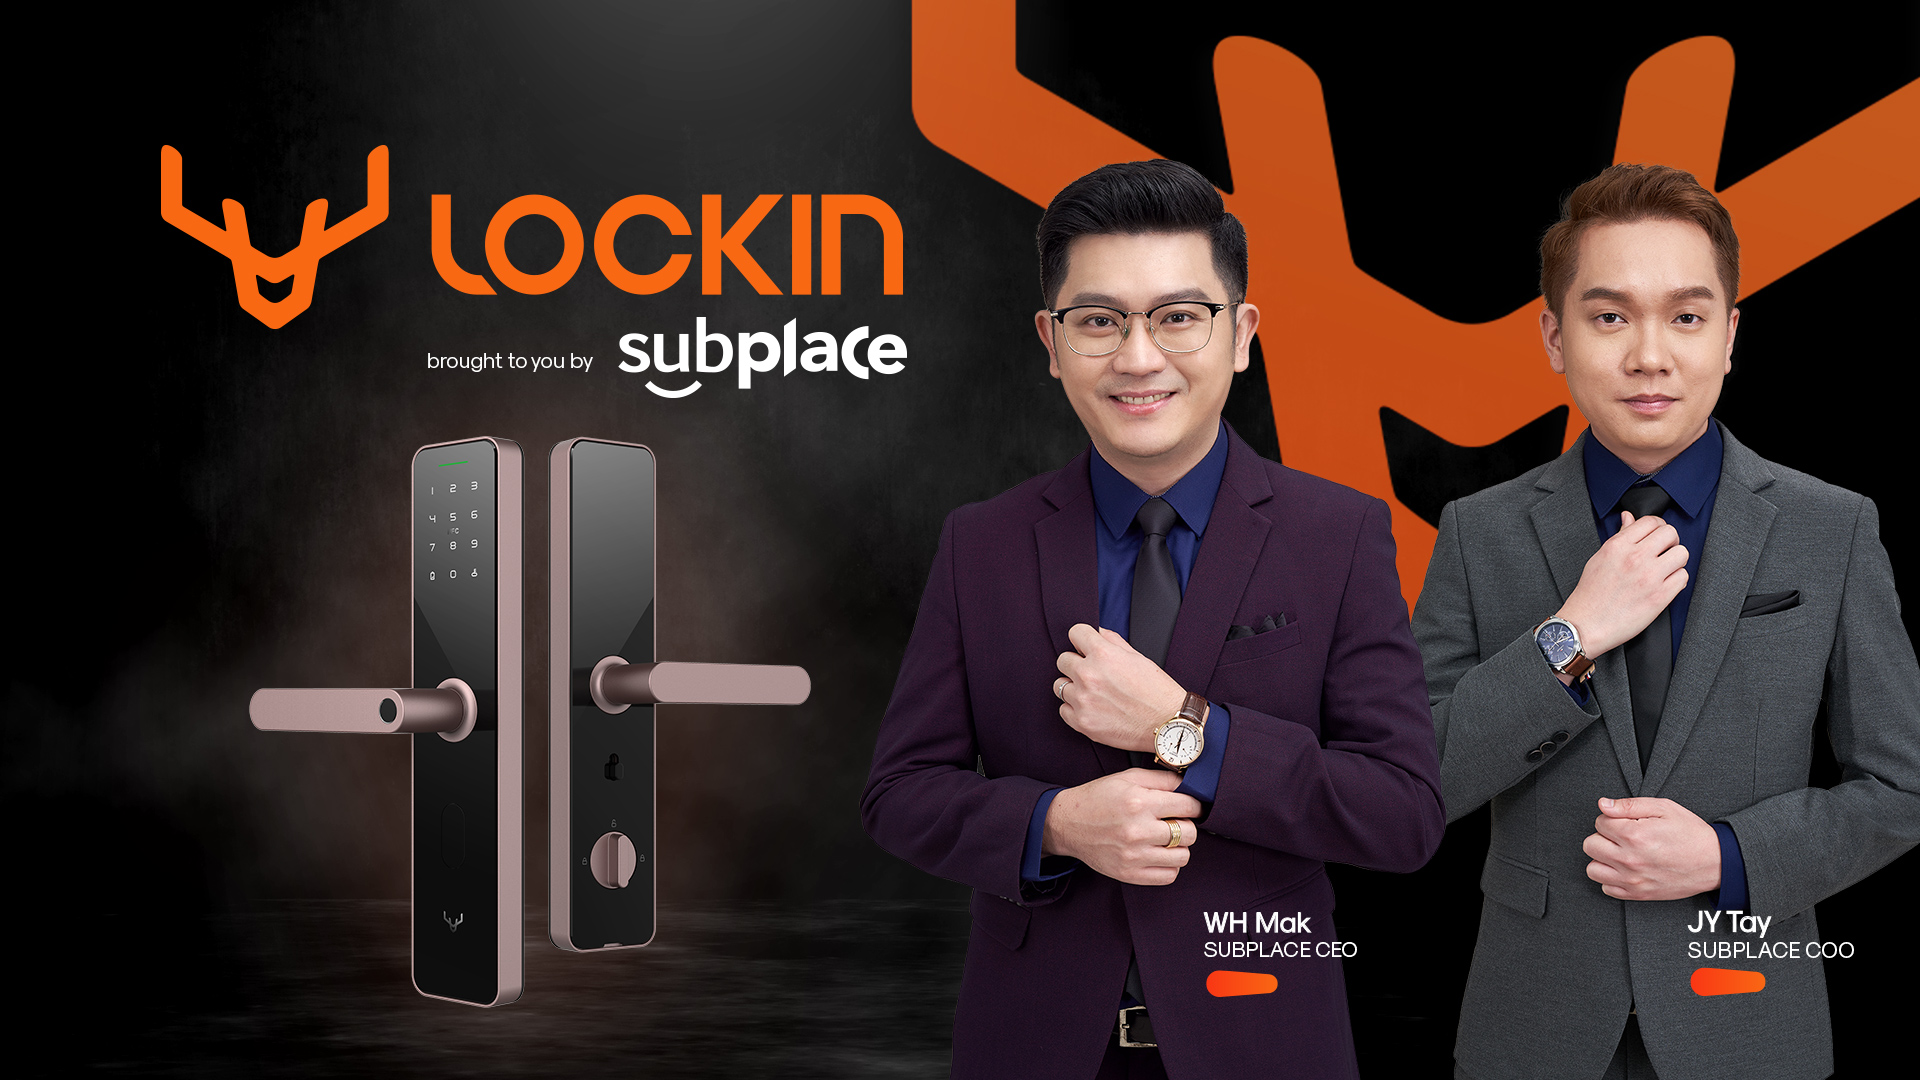 SUBPLACE LOCKIN 智能锁15分钟筹获666万令吉！